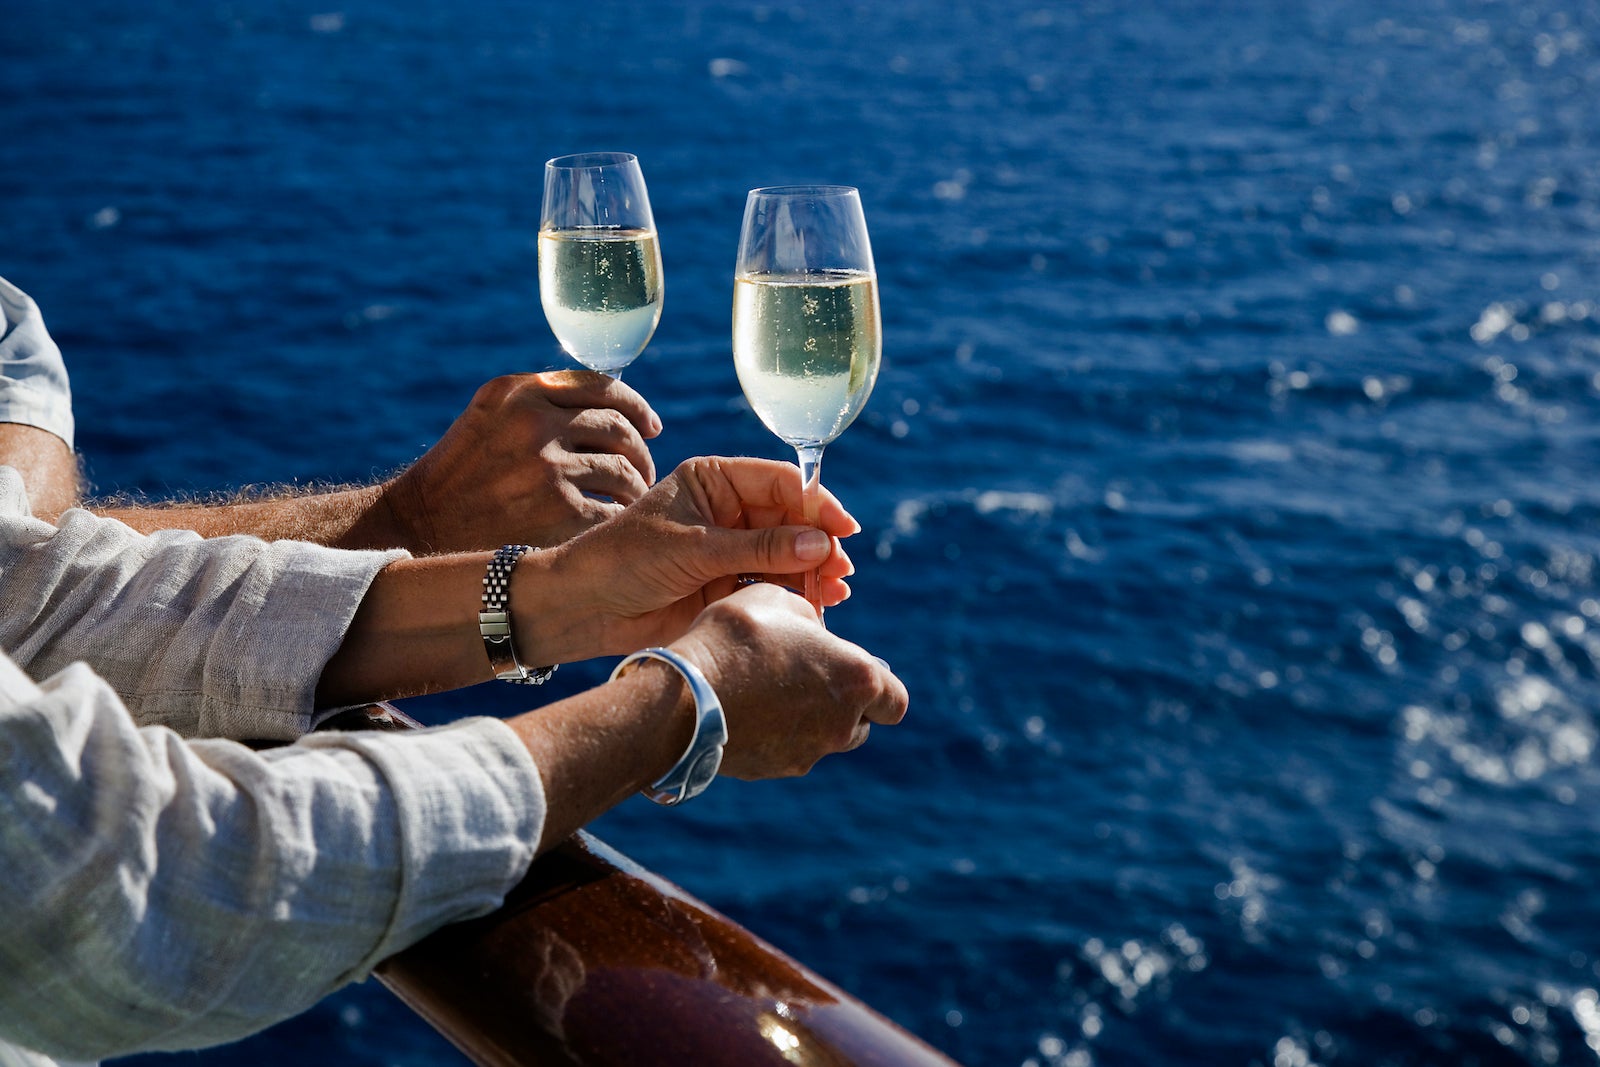 p&o cruises can you take alcohol on board uk